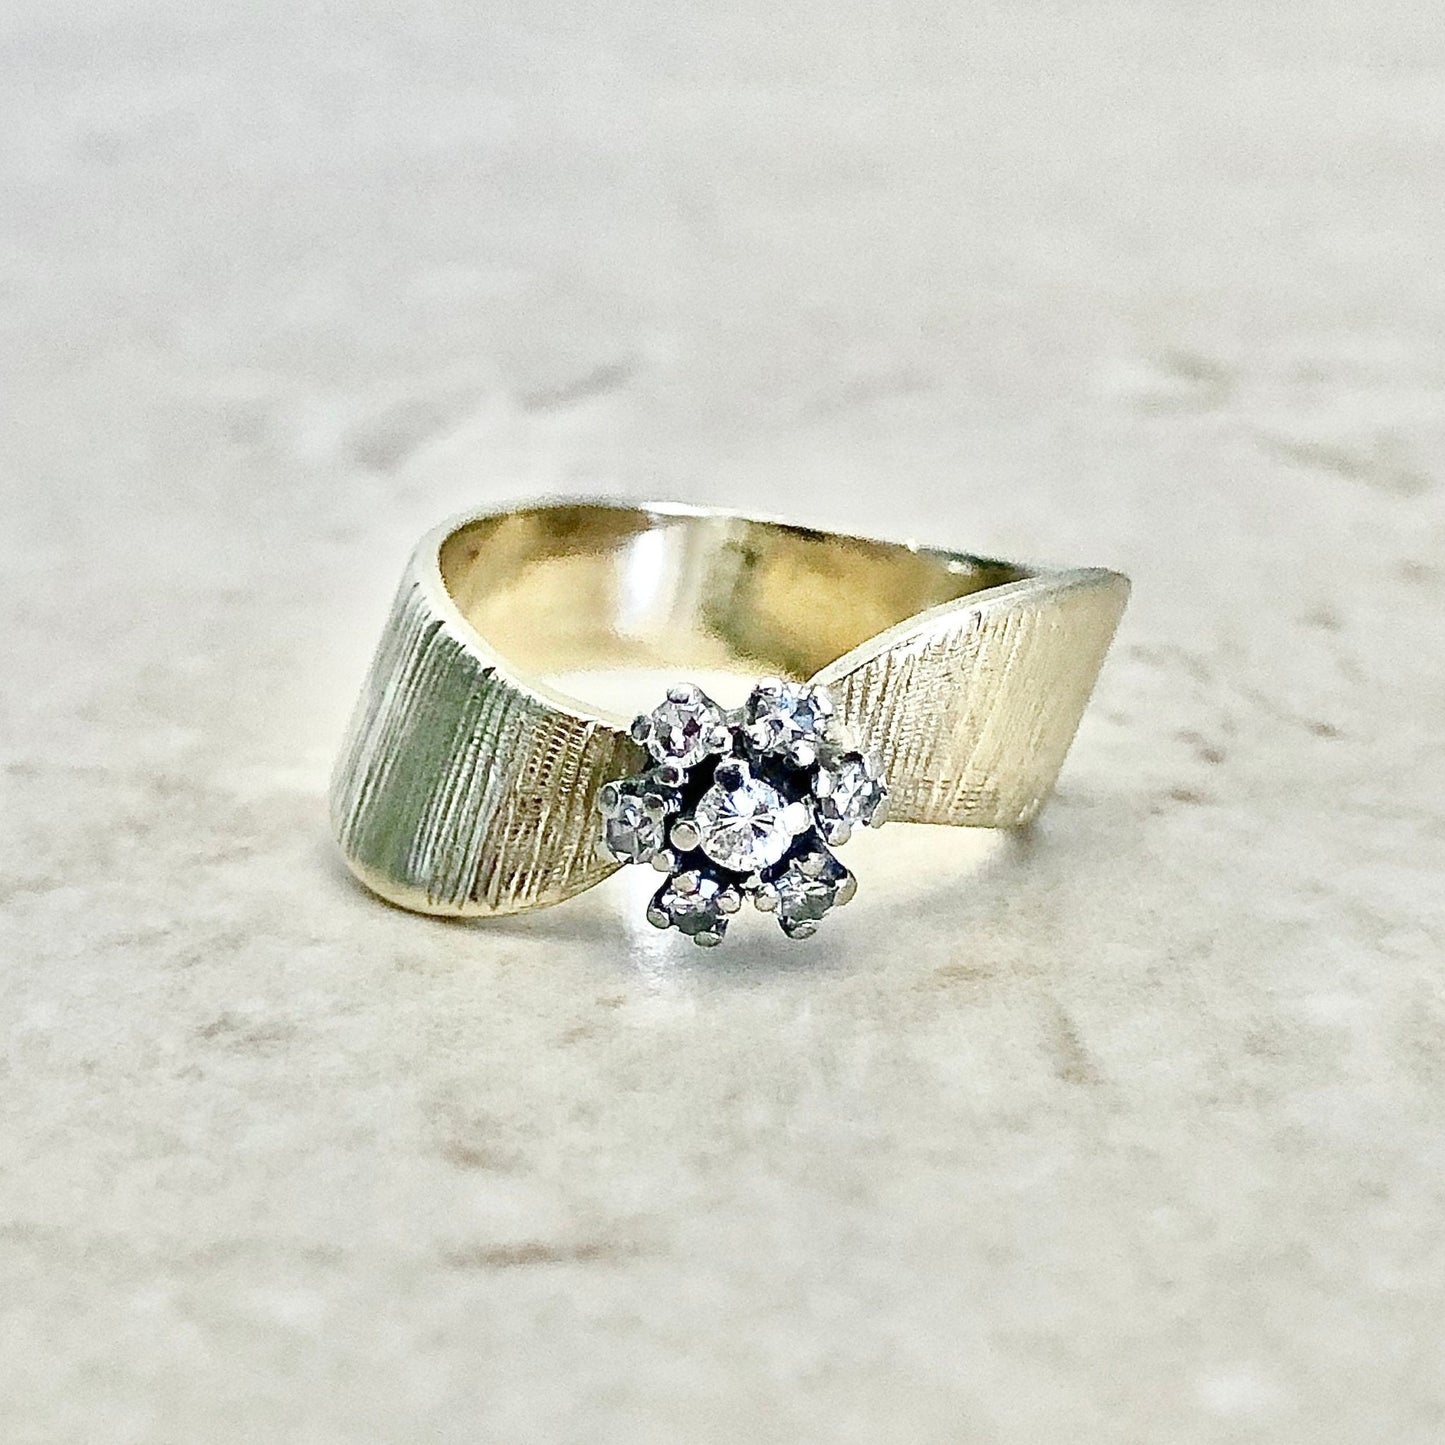 Vintage 14K Diamond Halo Ring - Flower Diamond Cocktail Ring - Two Tone Yellow & White Gold - Birthday Gift For Her